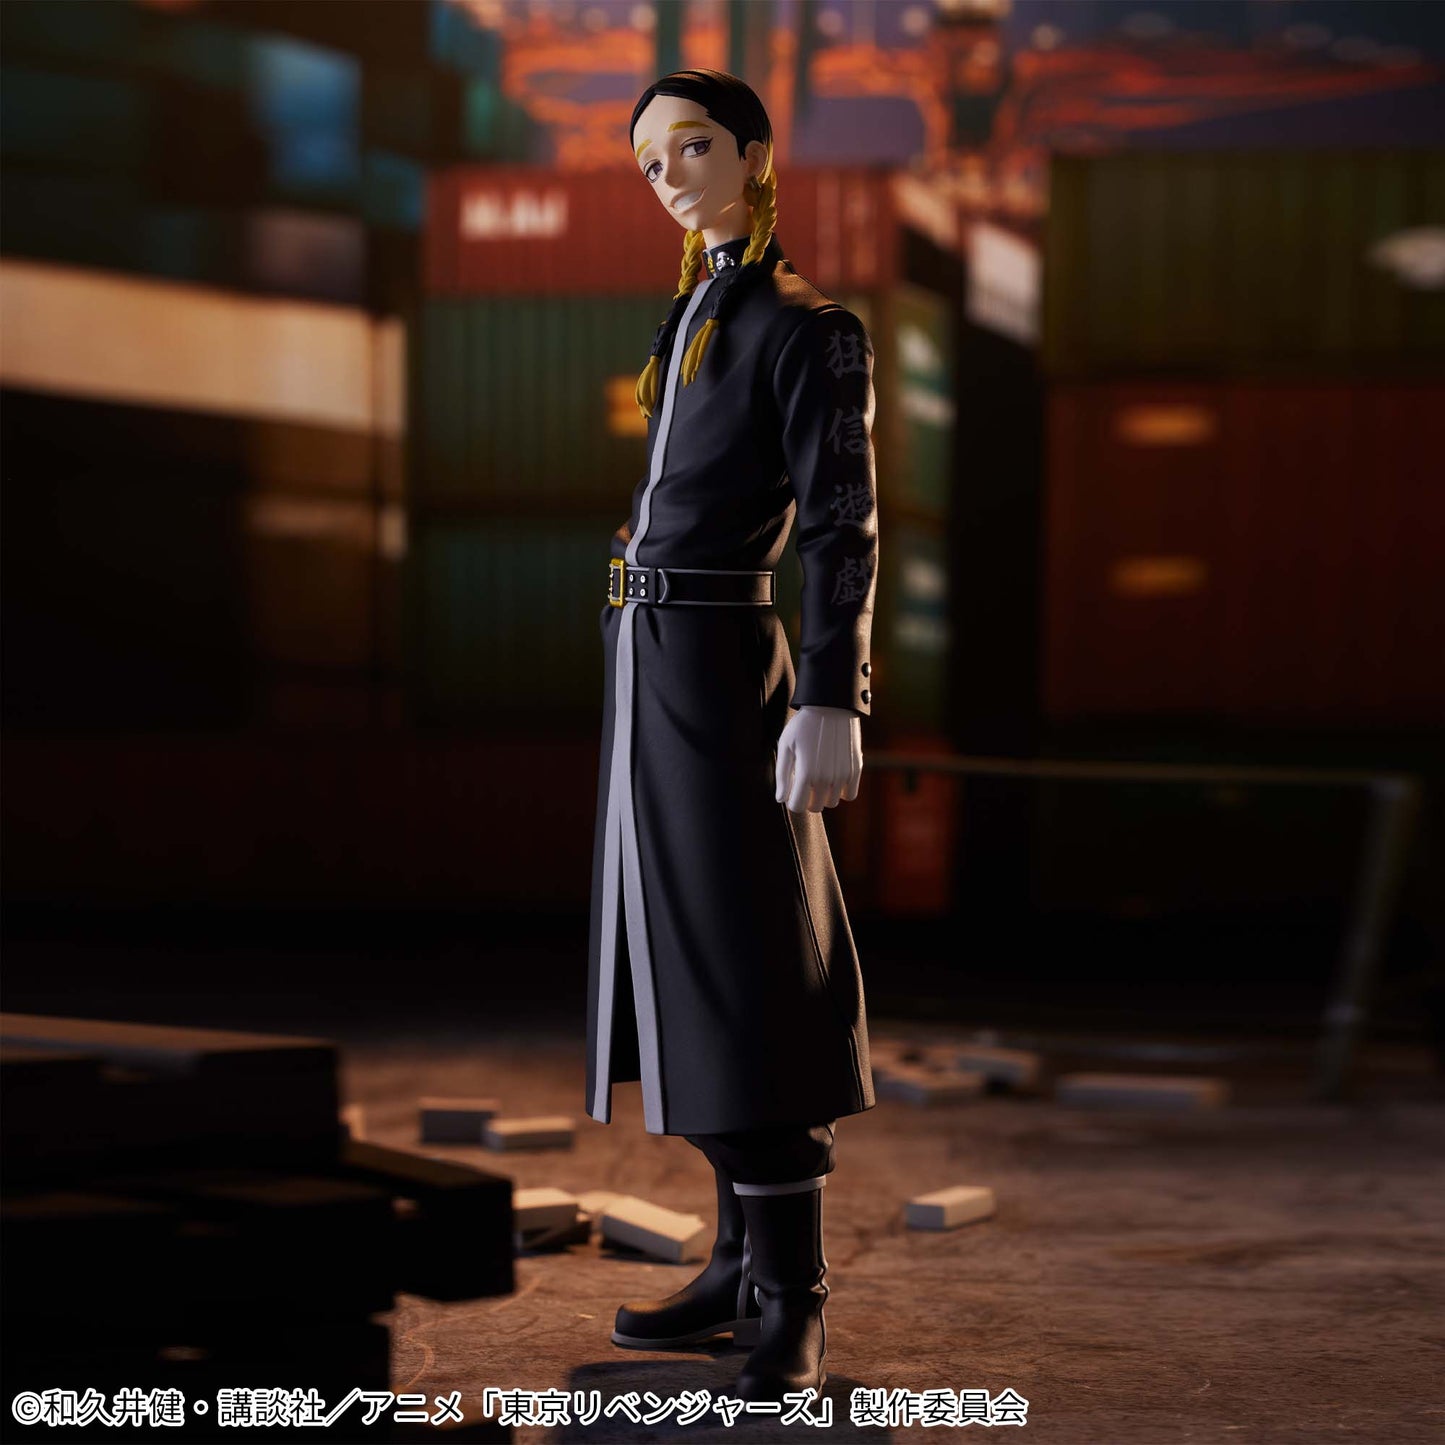 Figurine Ran Haitani & Rindo Haitani Tokyo Revengers Combo Set